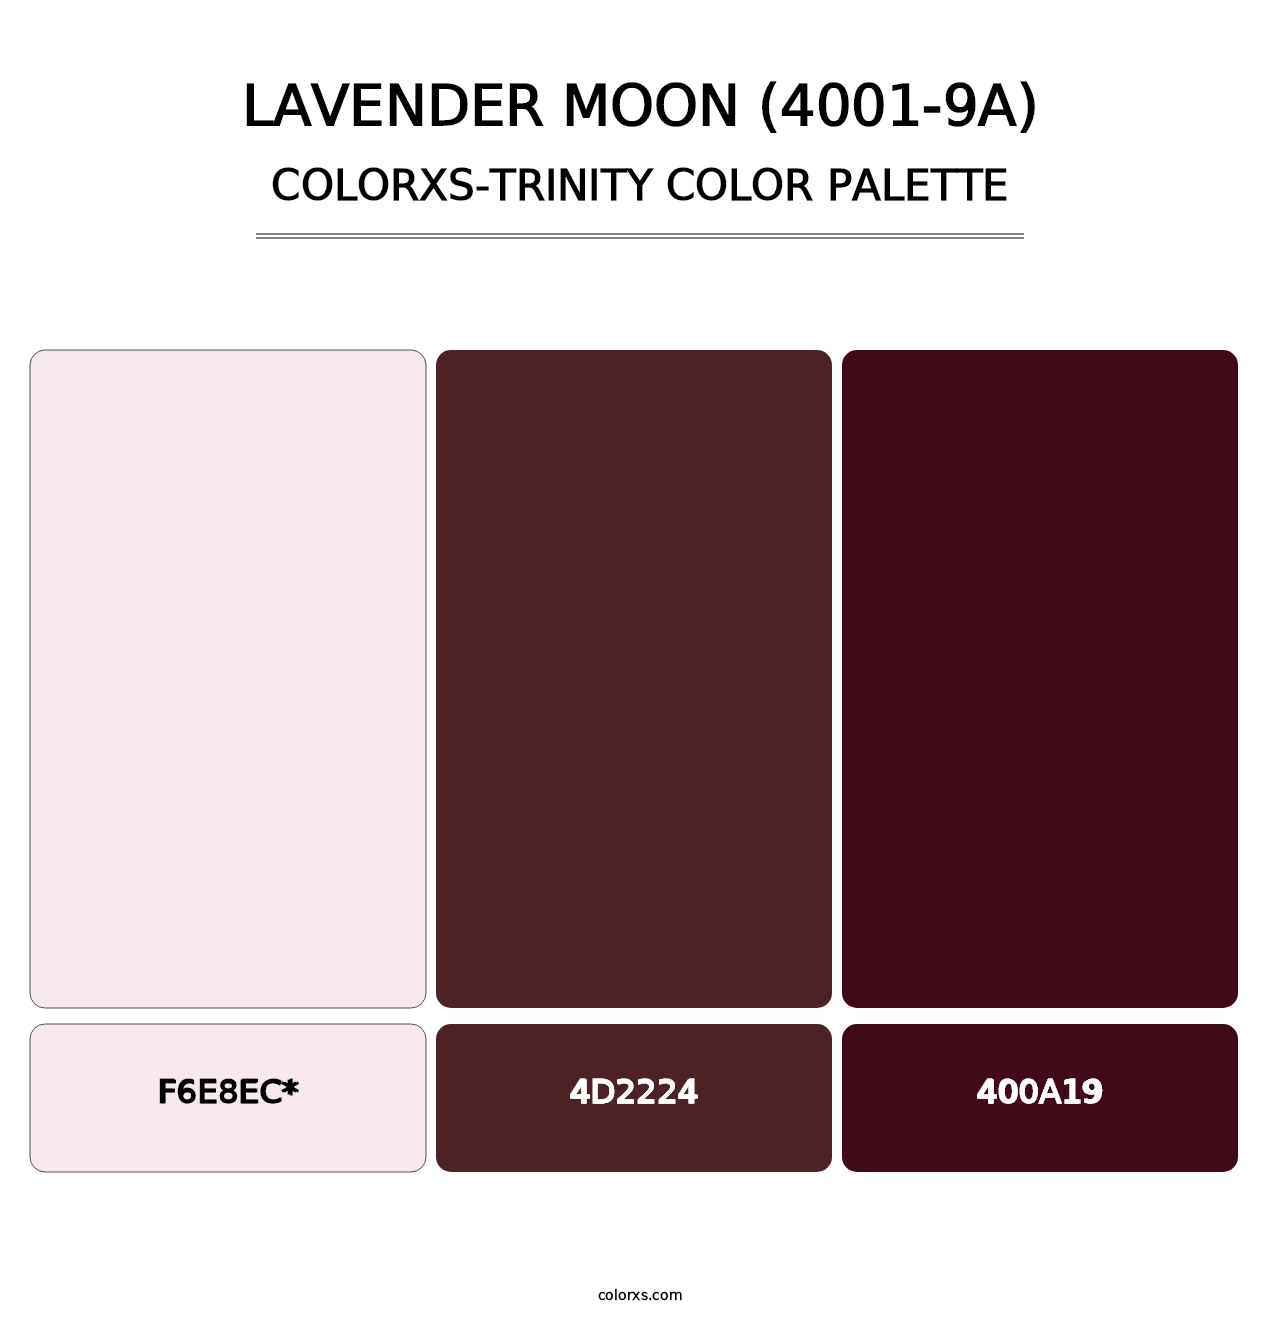 Lavender Moon (4001-9A) - Colorxs Trinity Palette